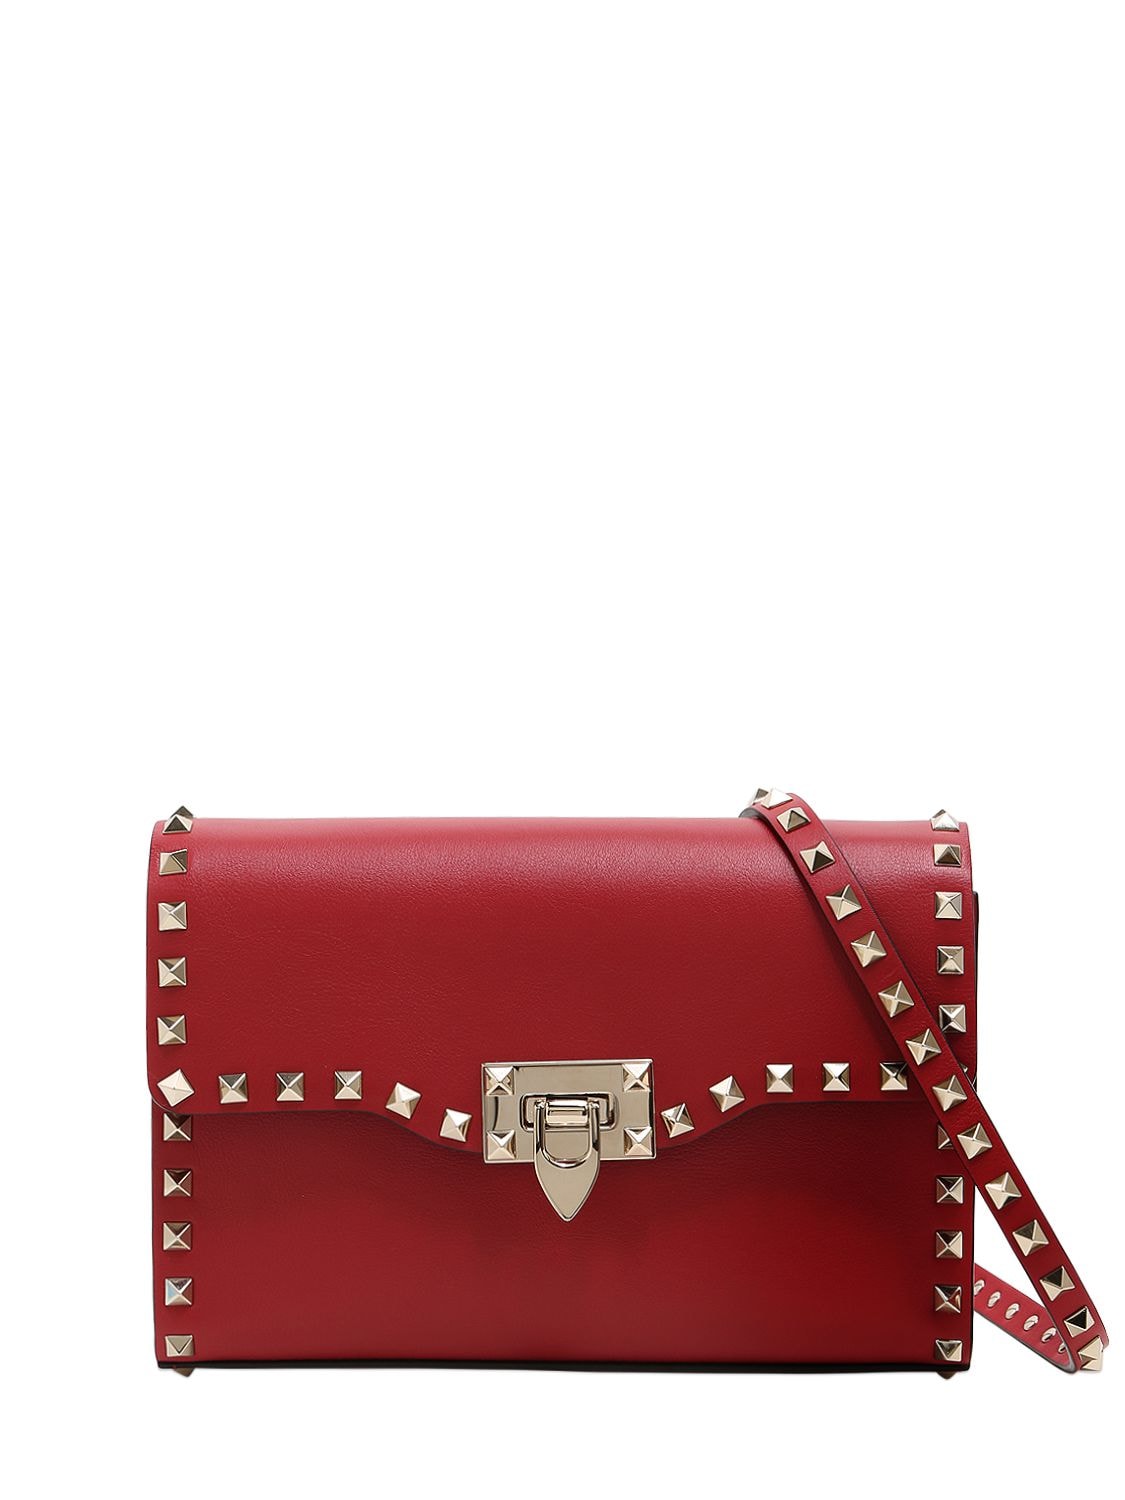 Valentino Garavani Rockstud Leather Bag In Valentino Red